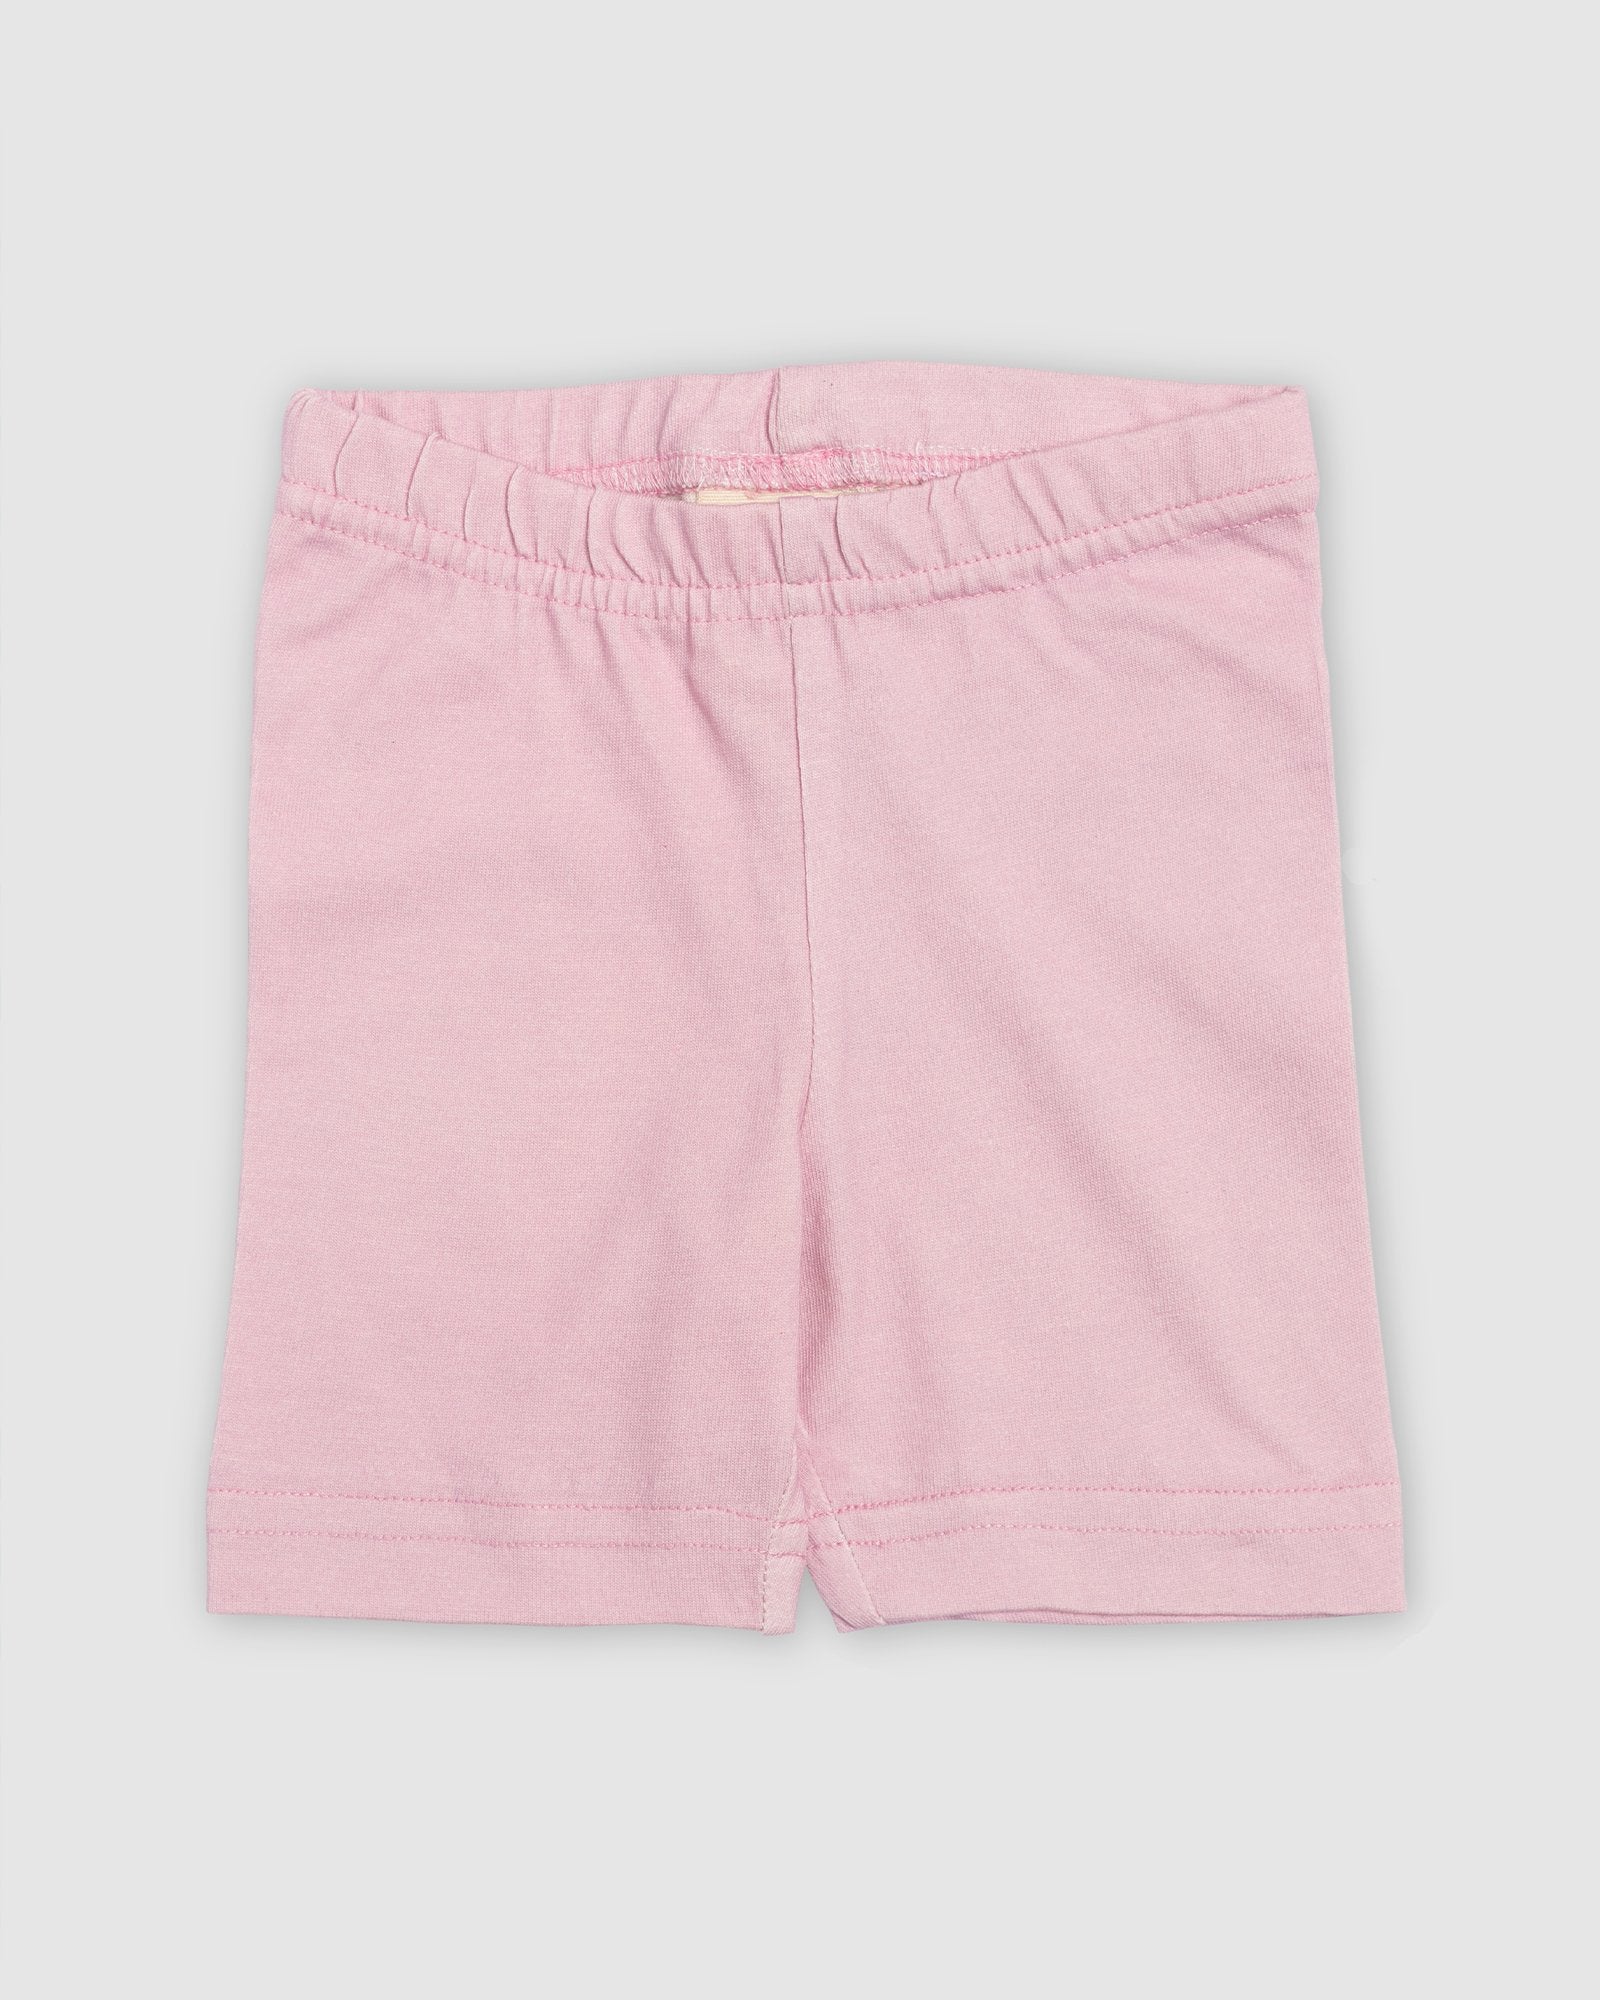 Pink Bike Shorts by Amber Days